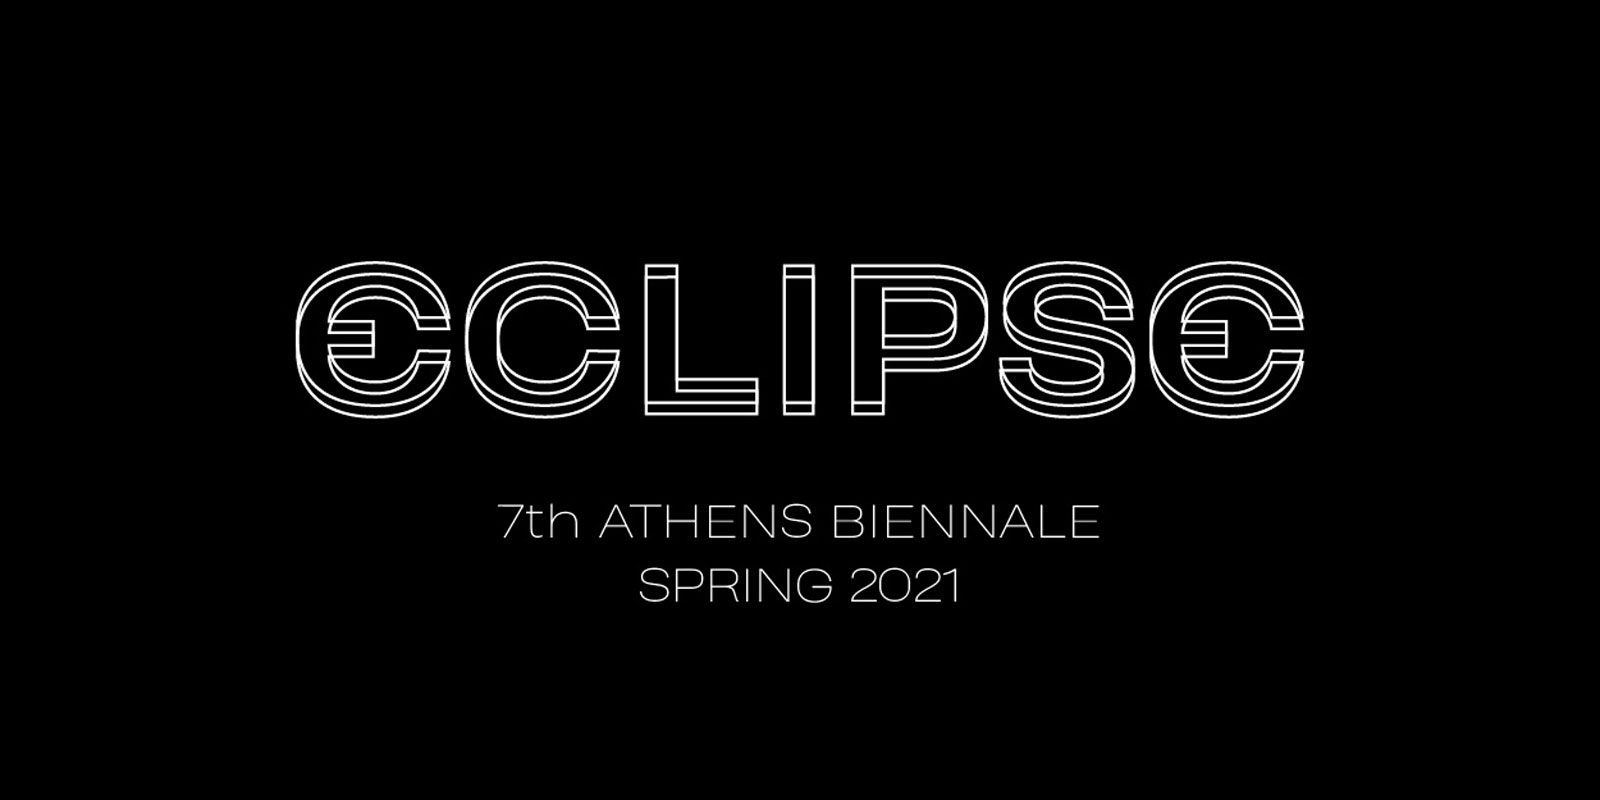 Archisearch Αναβολή της 7ης Athens Biennale: ECLIPSE για την Άνοιξη του 2021